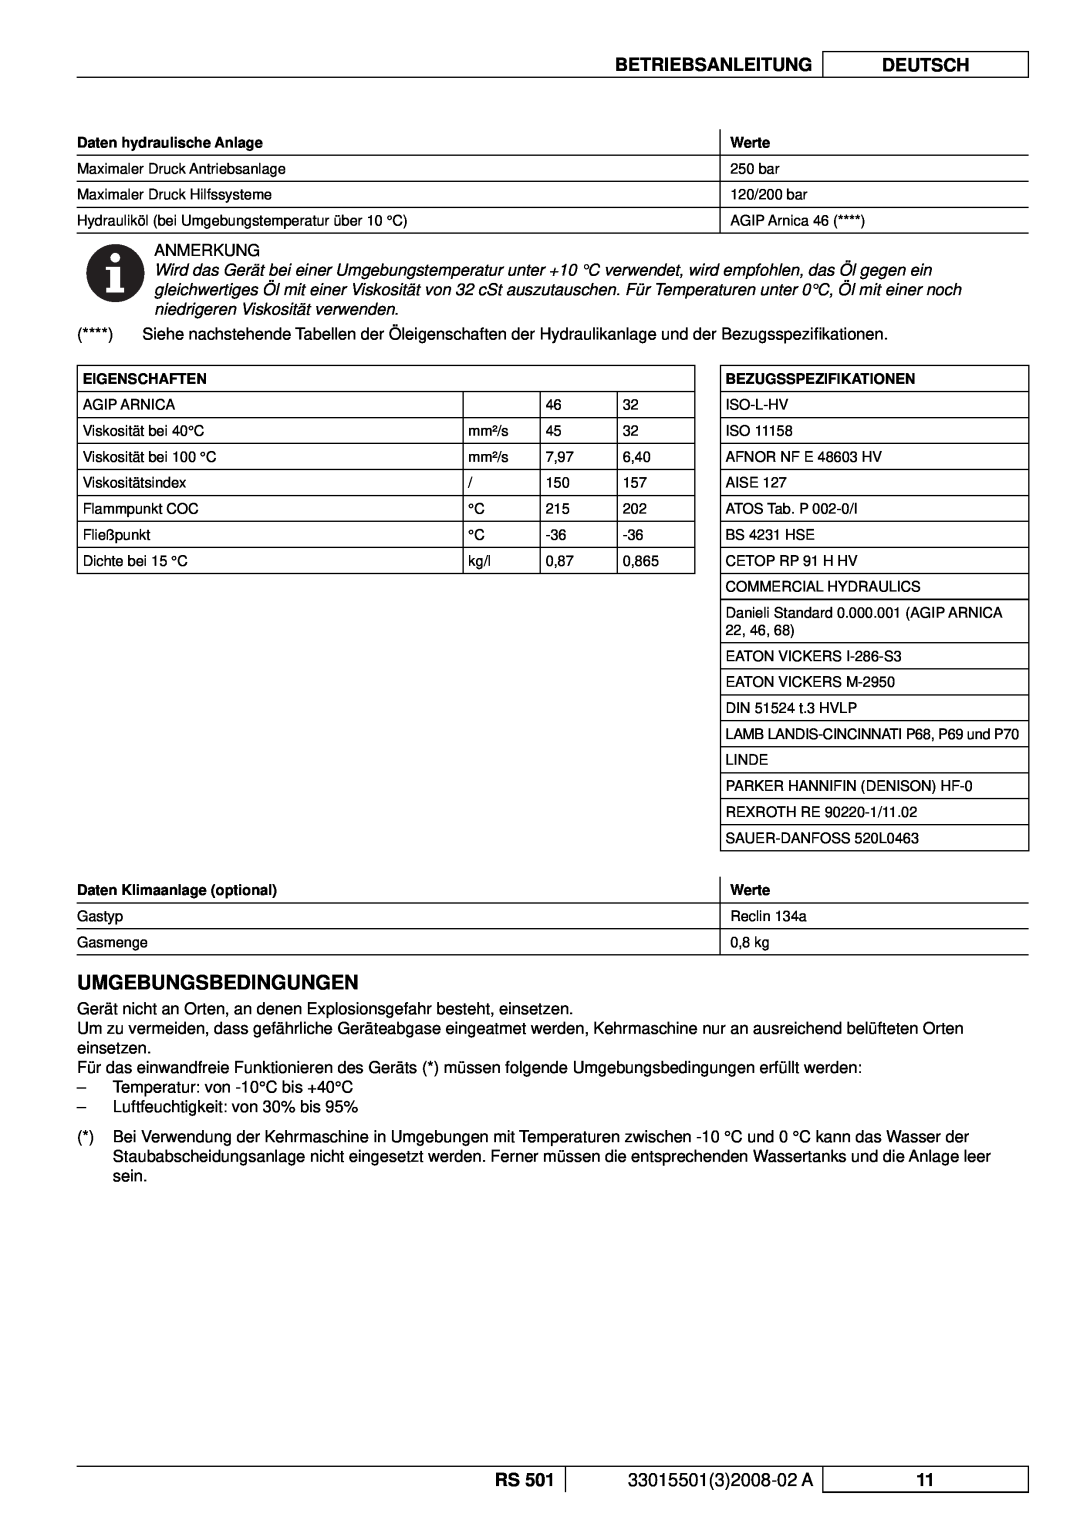 Nilfisk-ALTO RS 501 manuel dutilisation Umgebungsbedingungen, Betriebsanleitung, Deutsch, 3301550132008-02A 